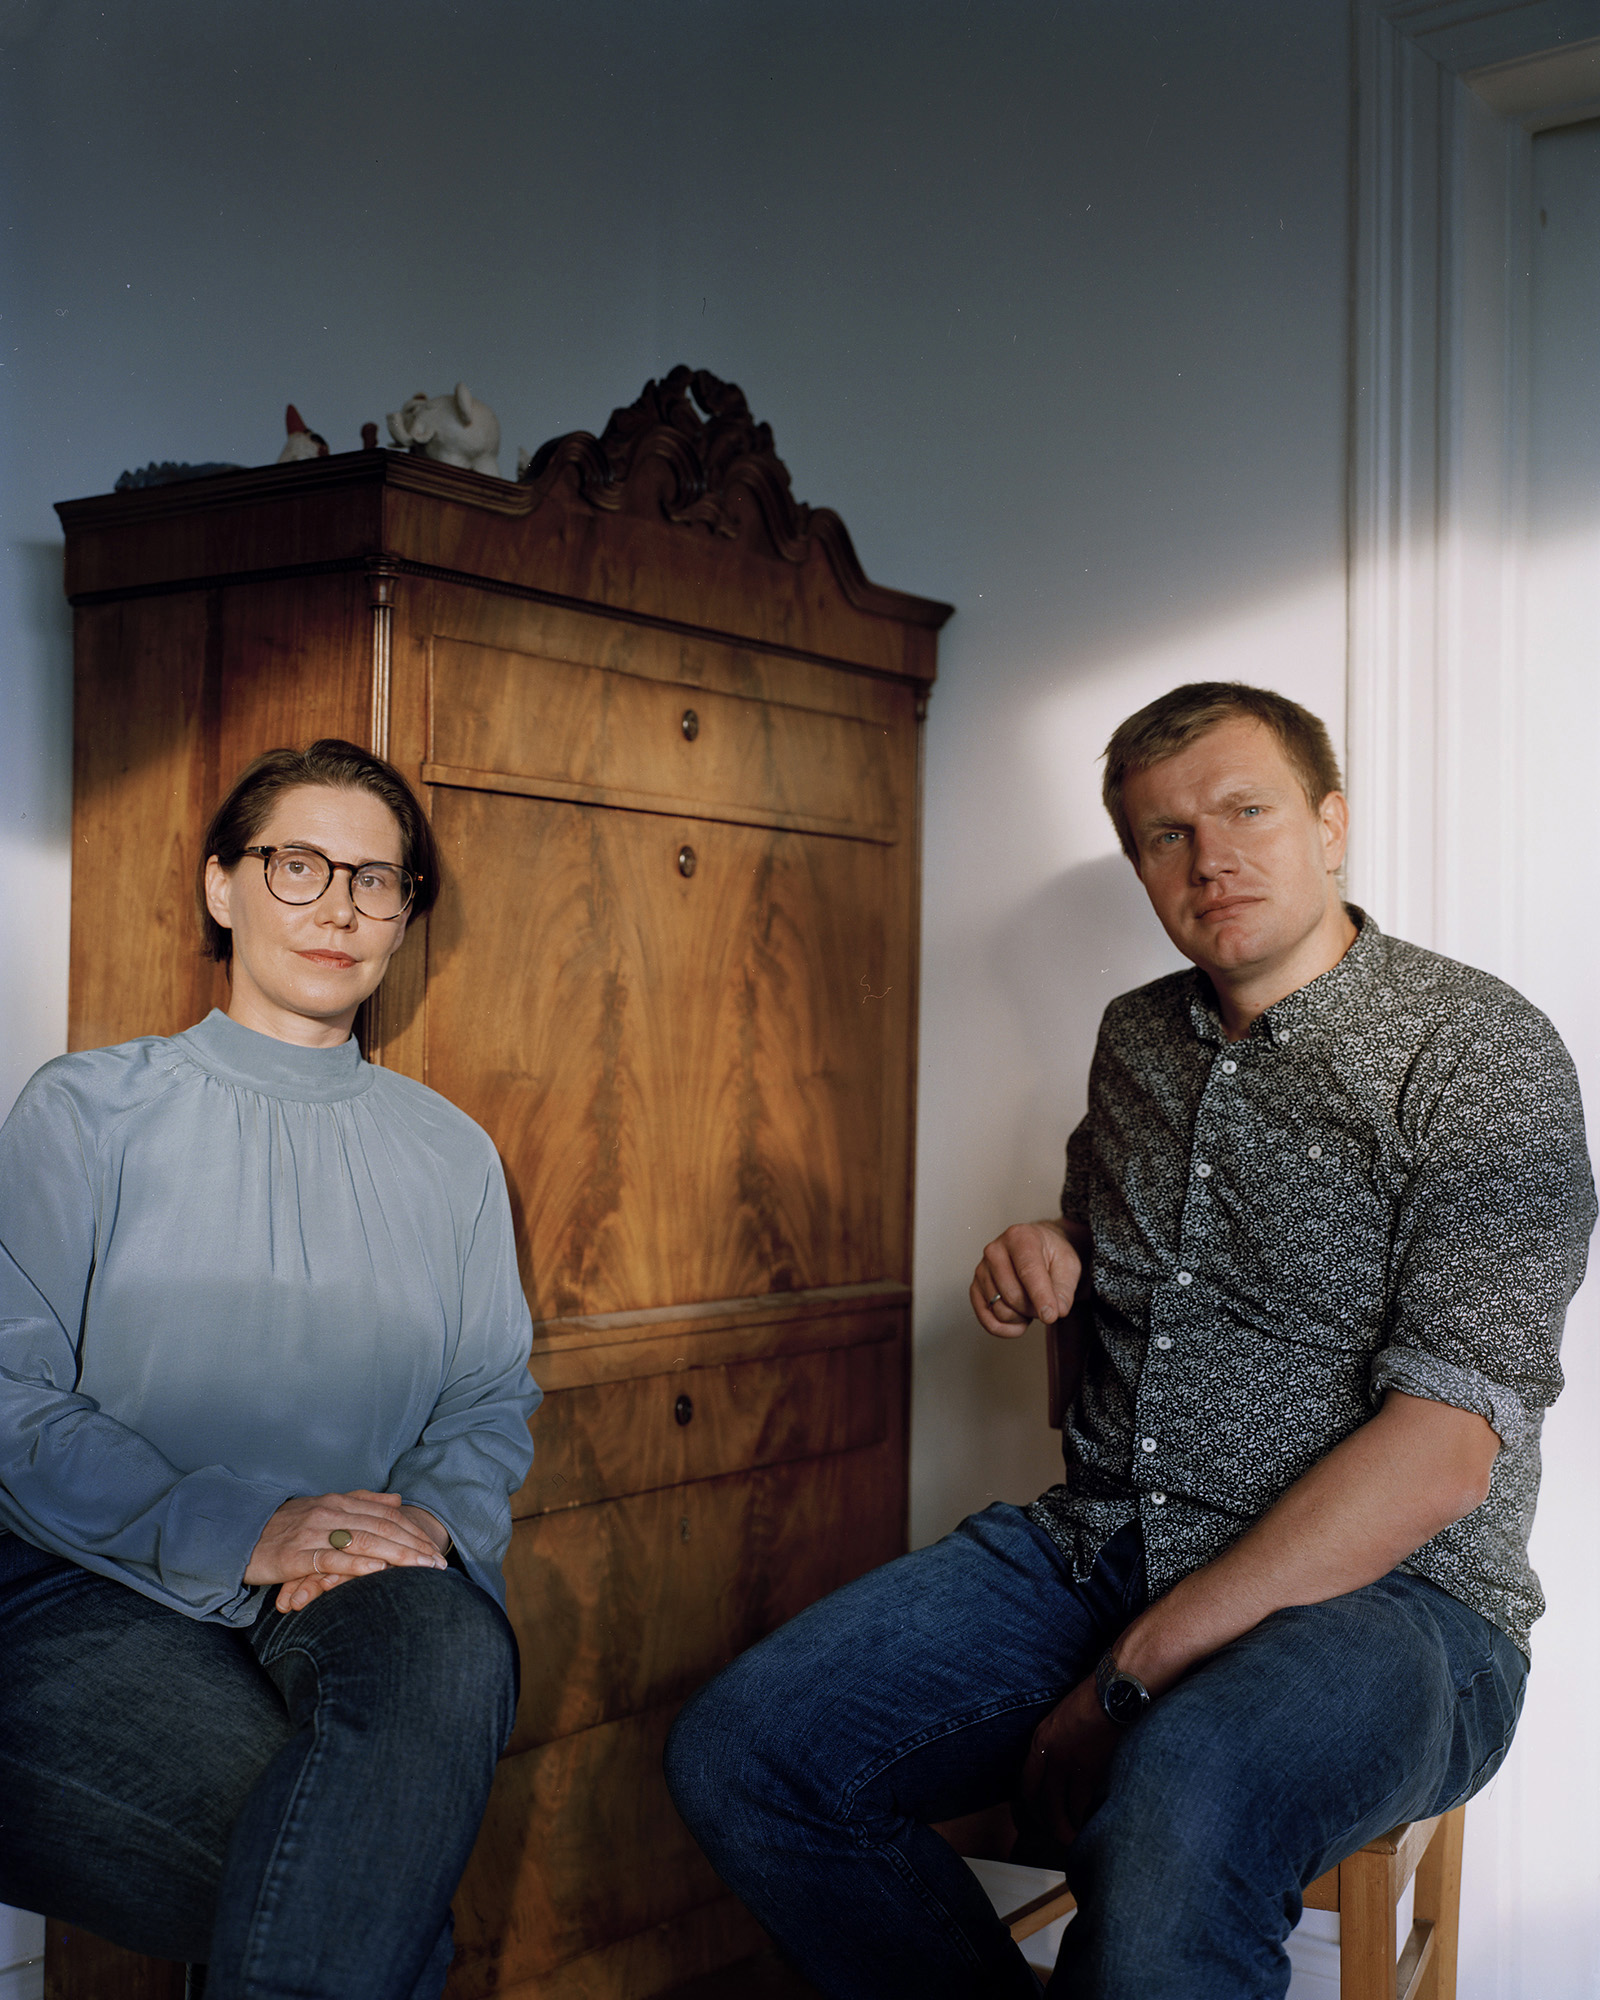 KAJA SMITH Julia Wöllenstein and Marcel Helbig for CHRISMON